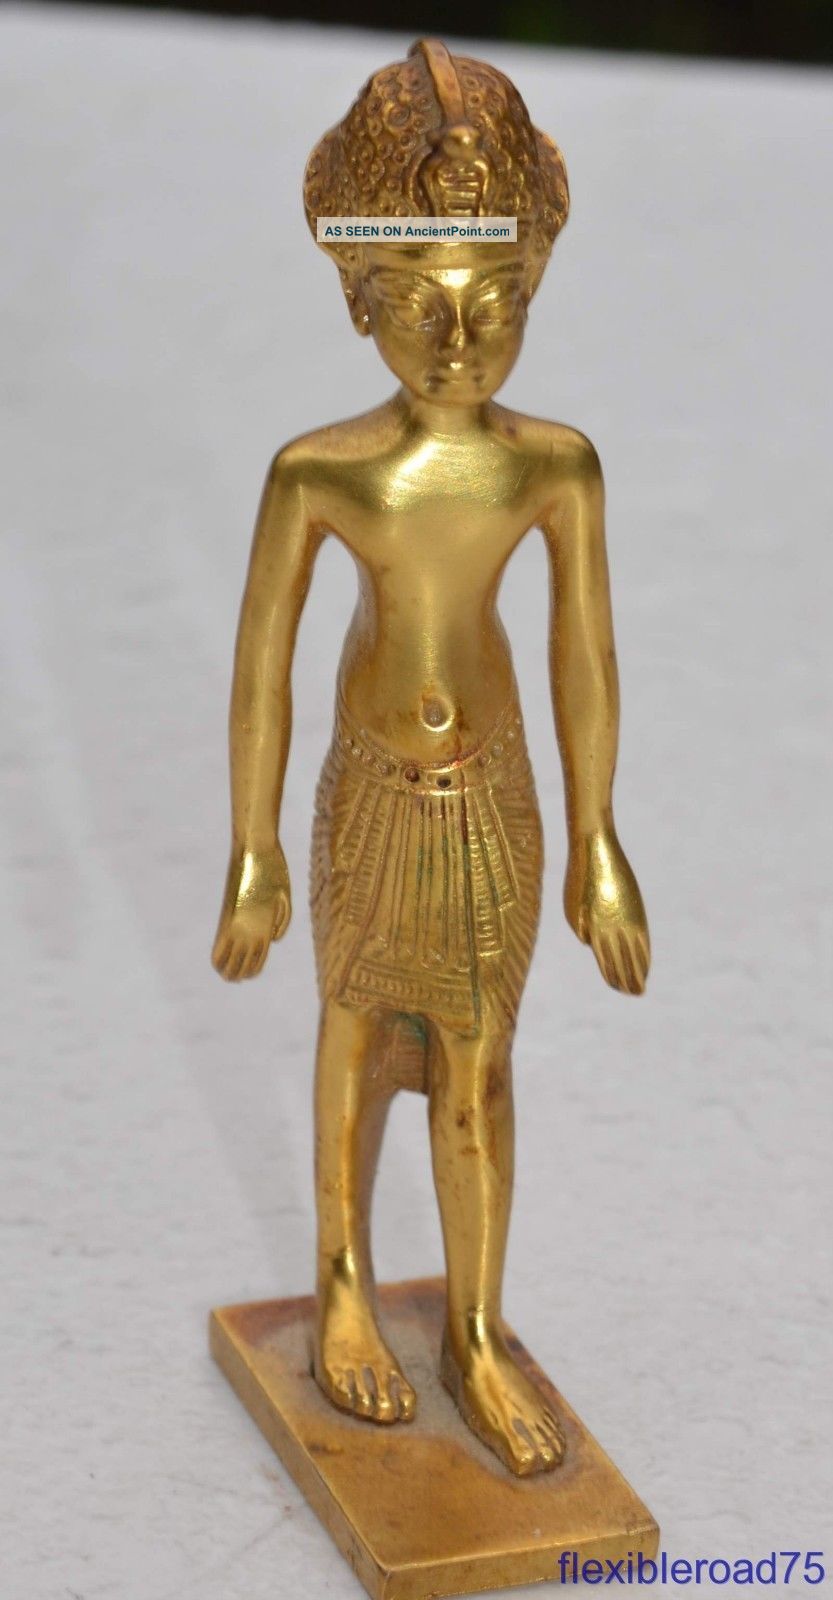 1976 King Tut Brass Statue Mma Metropolitan Museum Of Art Exhibit Piece Reproductions photo